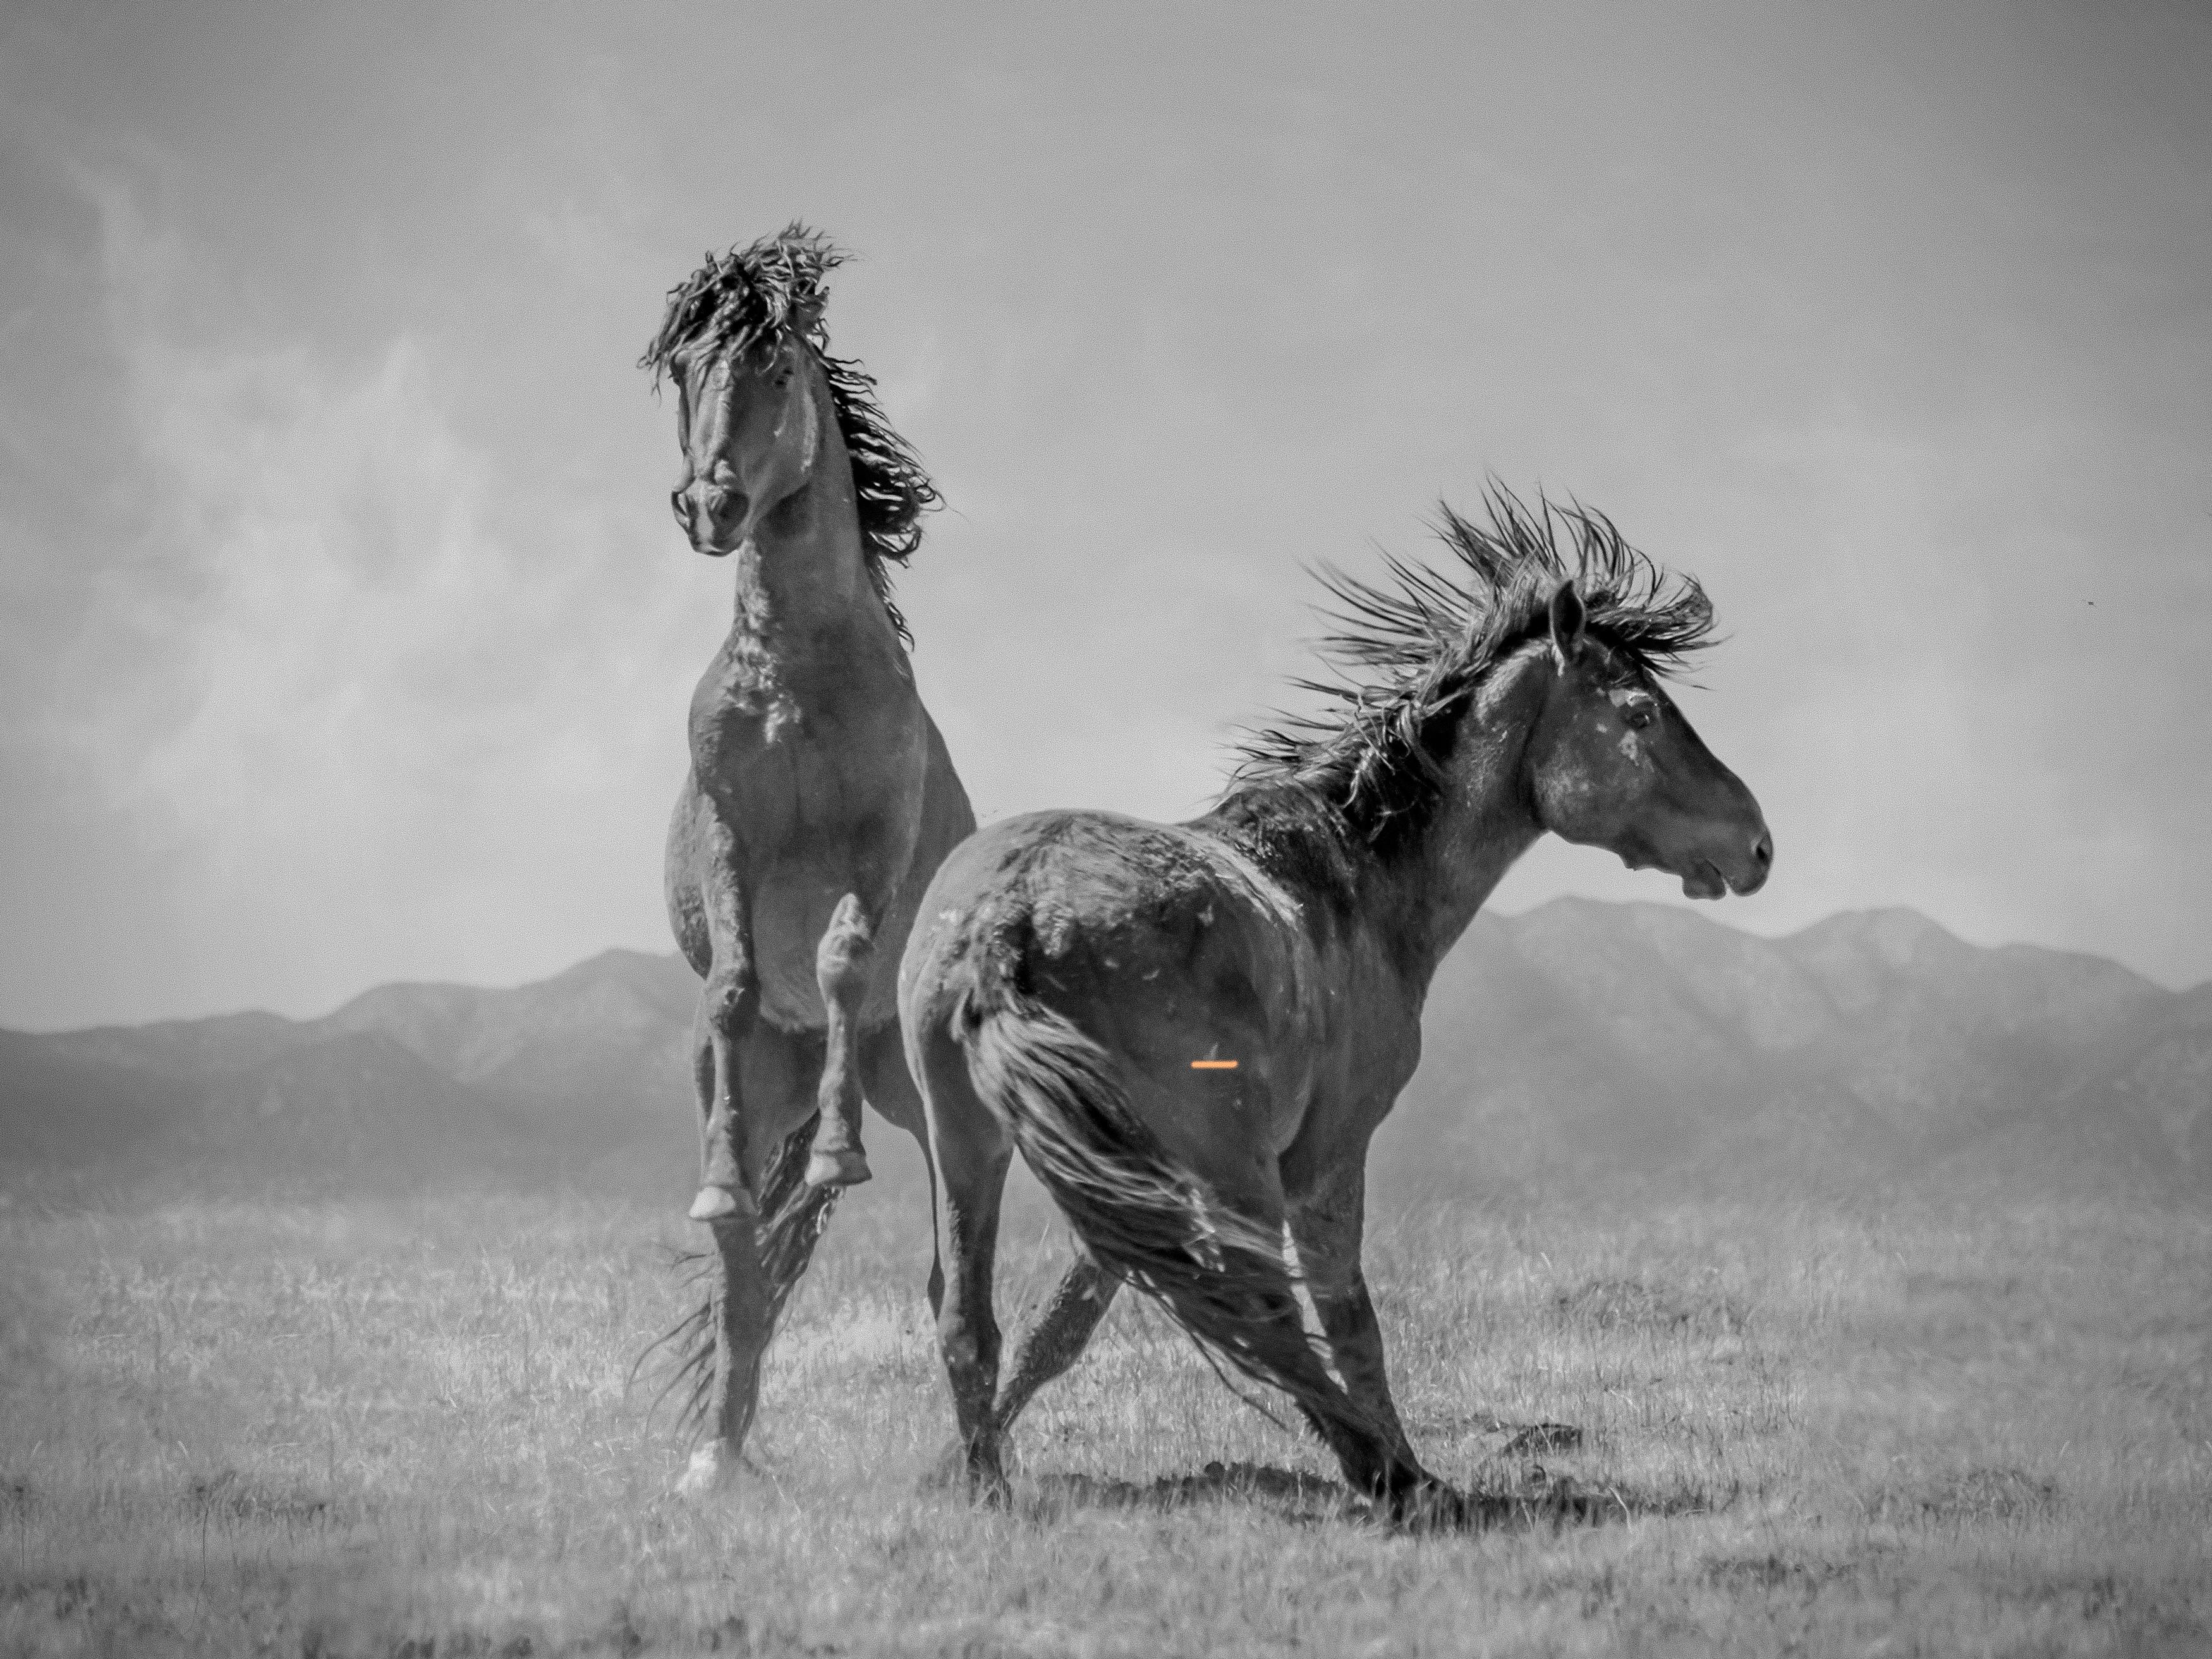 Shane Russeck Animal Print - "Wonder Horses" 40x50 - Black & White Photography, Wild Horses Mustangs Unsigned